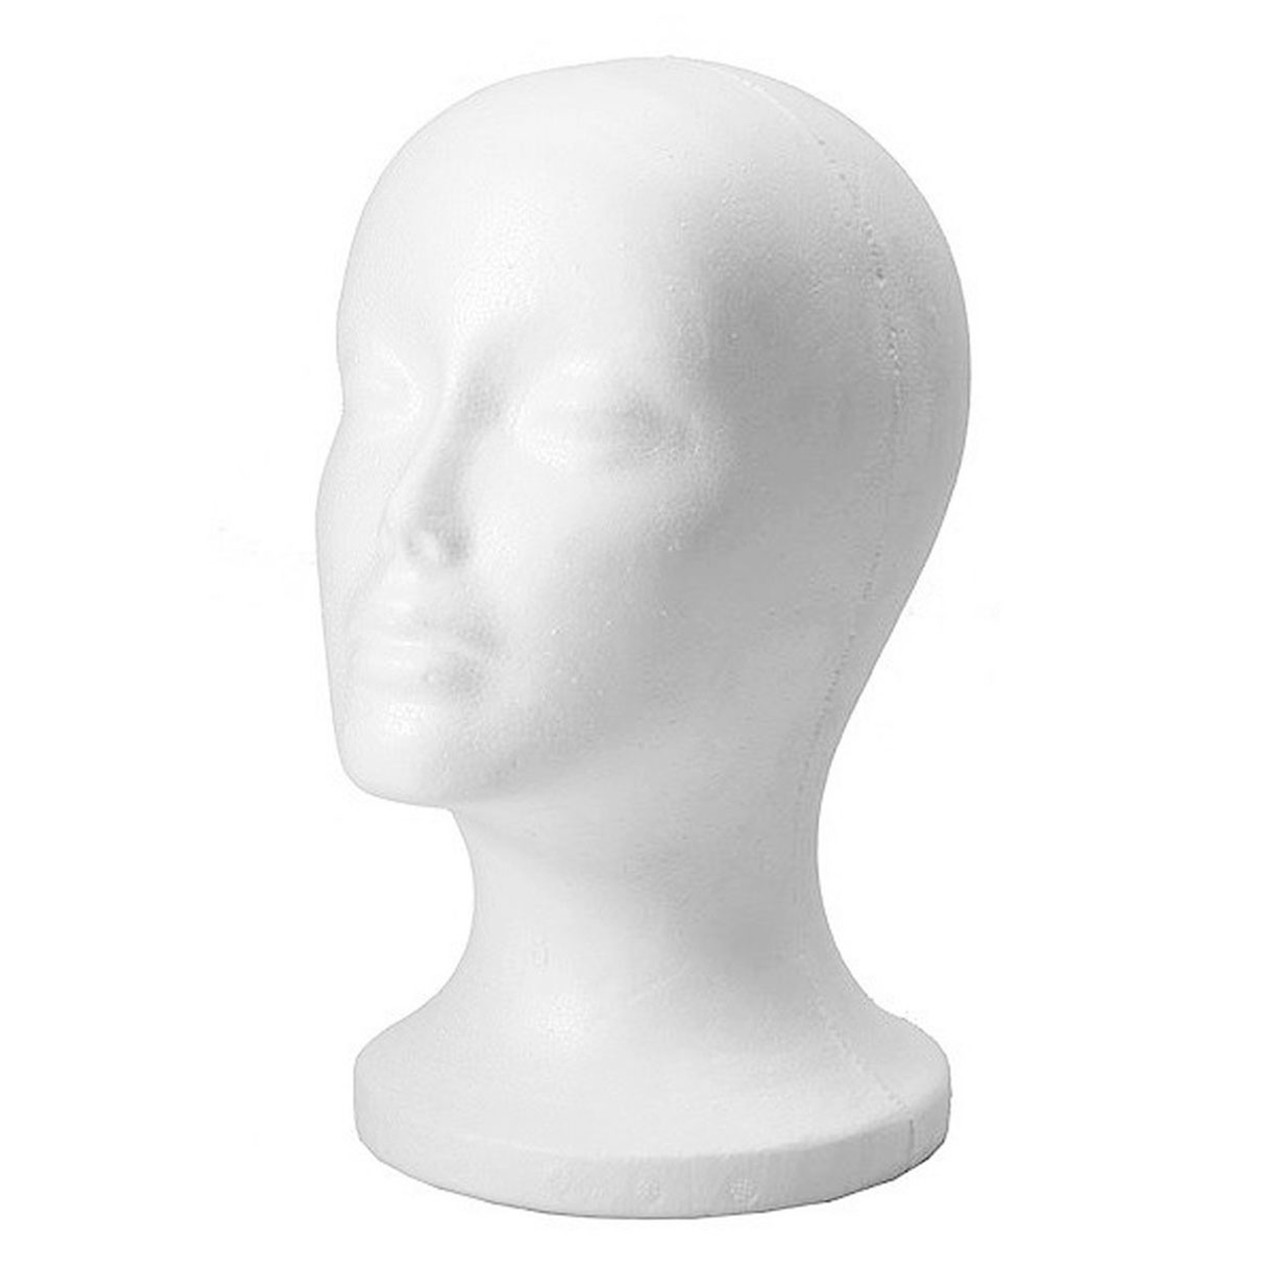 Wig Head Styrofoam Model Manikin Tall Female Wig Display Stand for Travel